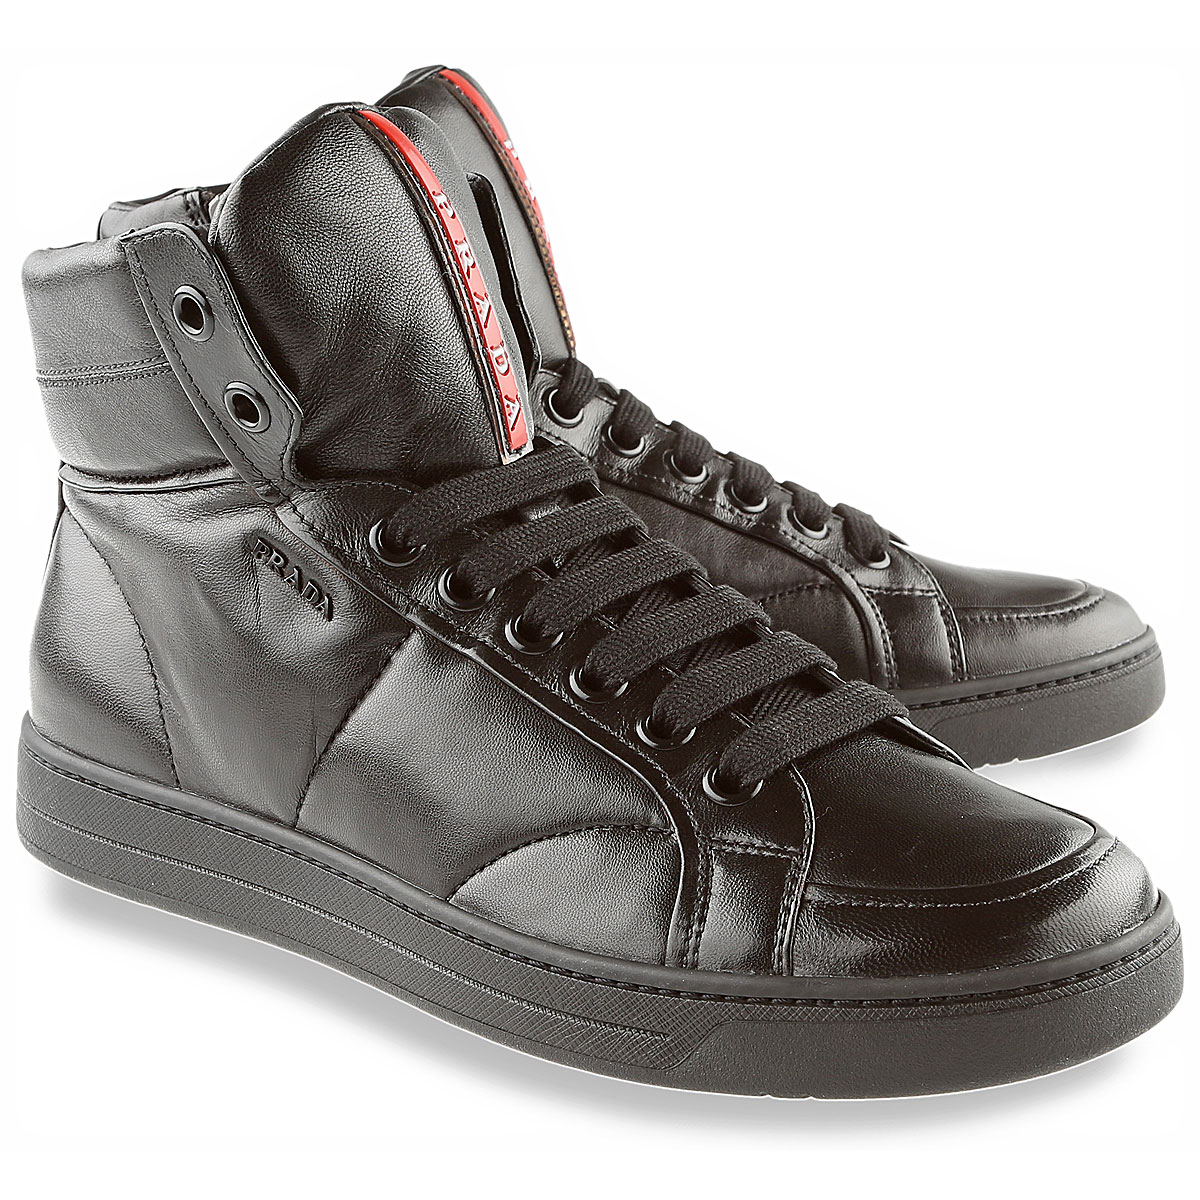 Mens Shoes Prada, Style code: 4t2596-0z7-f0002